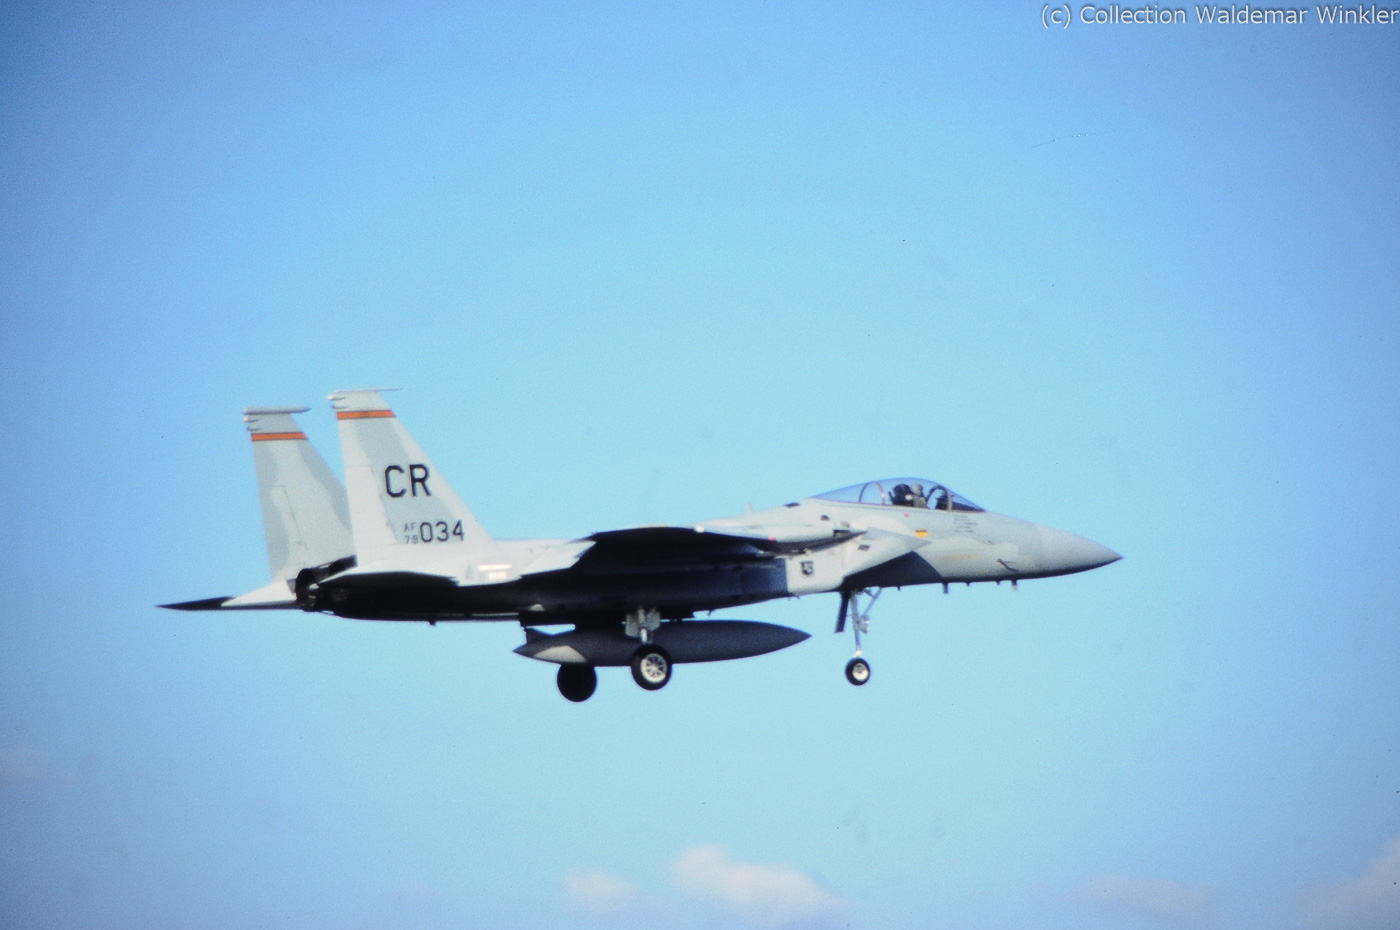 F-15A_Strike_Eagle_DSC_2921.jpg